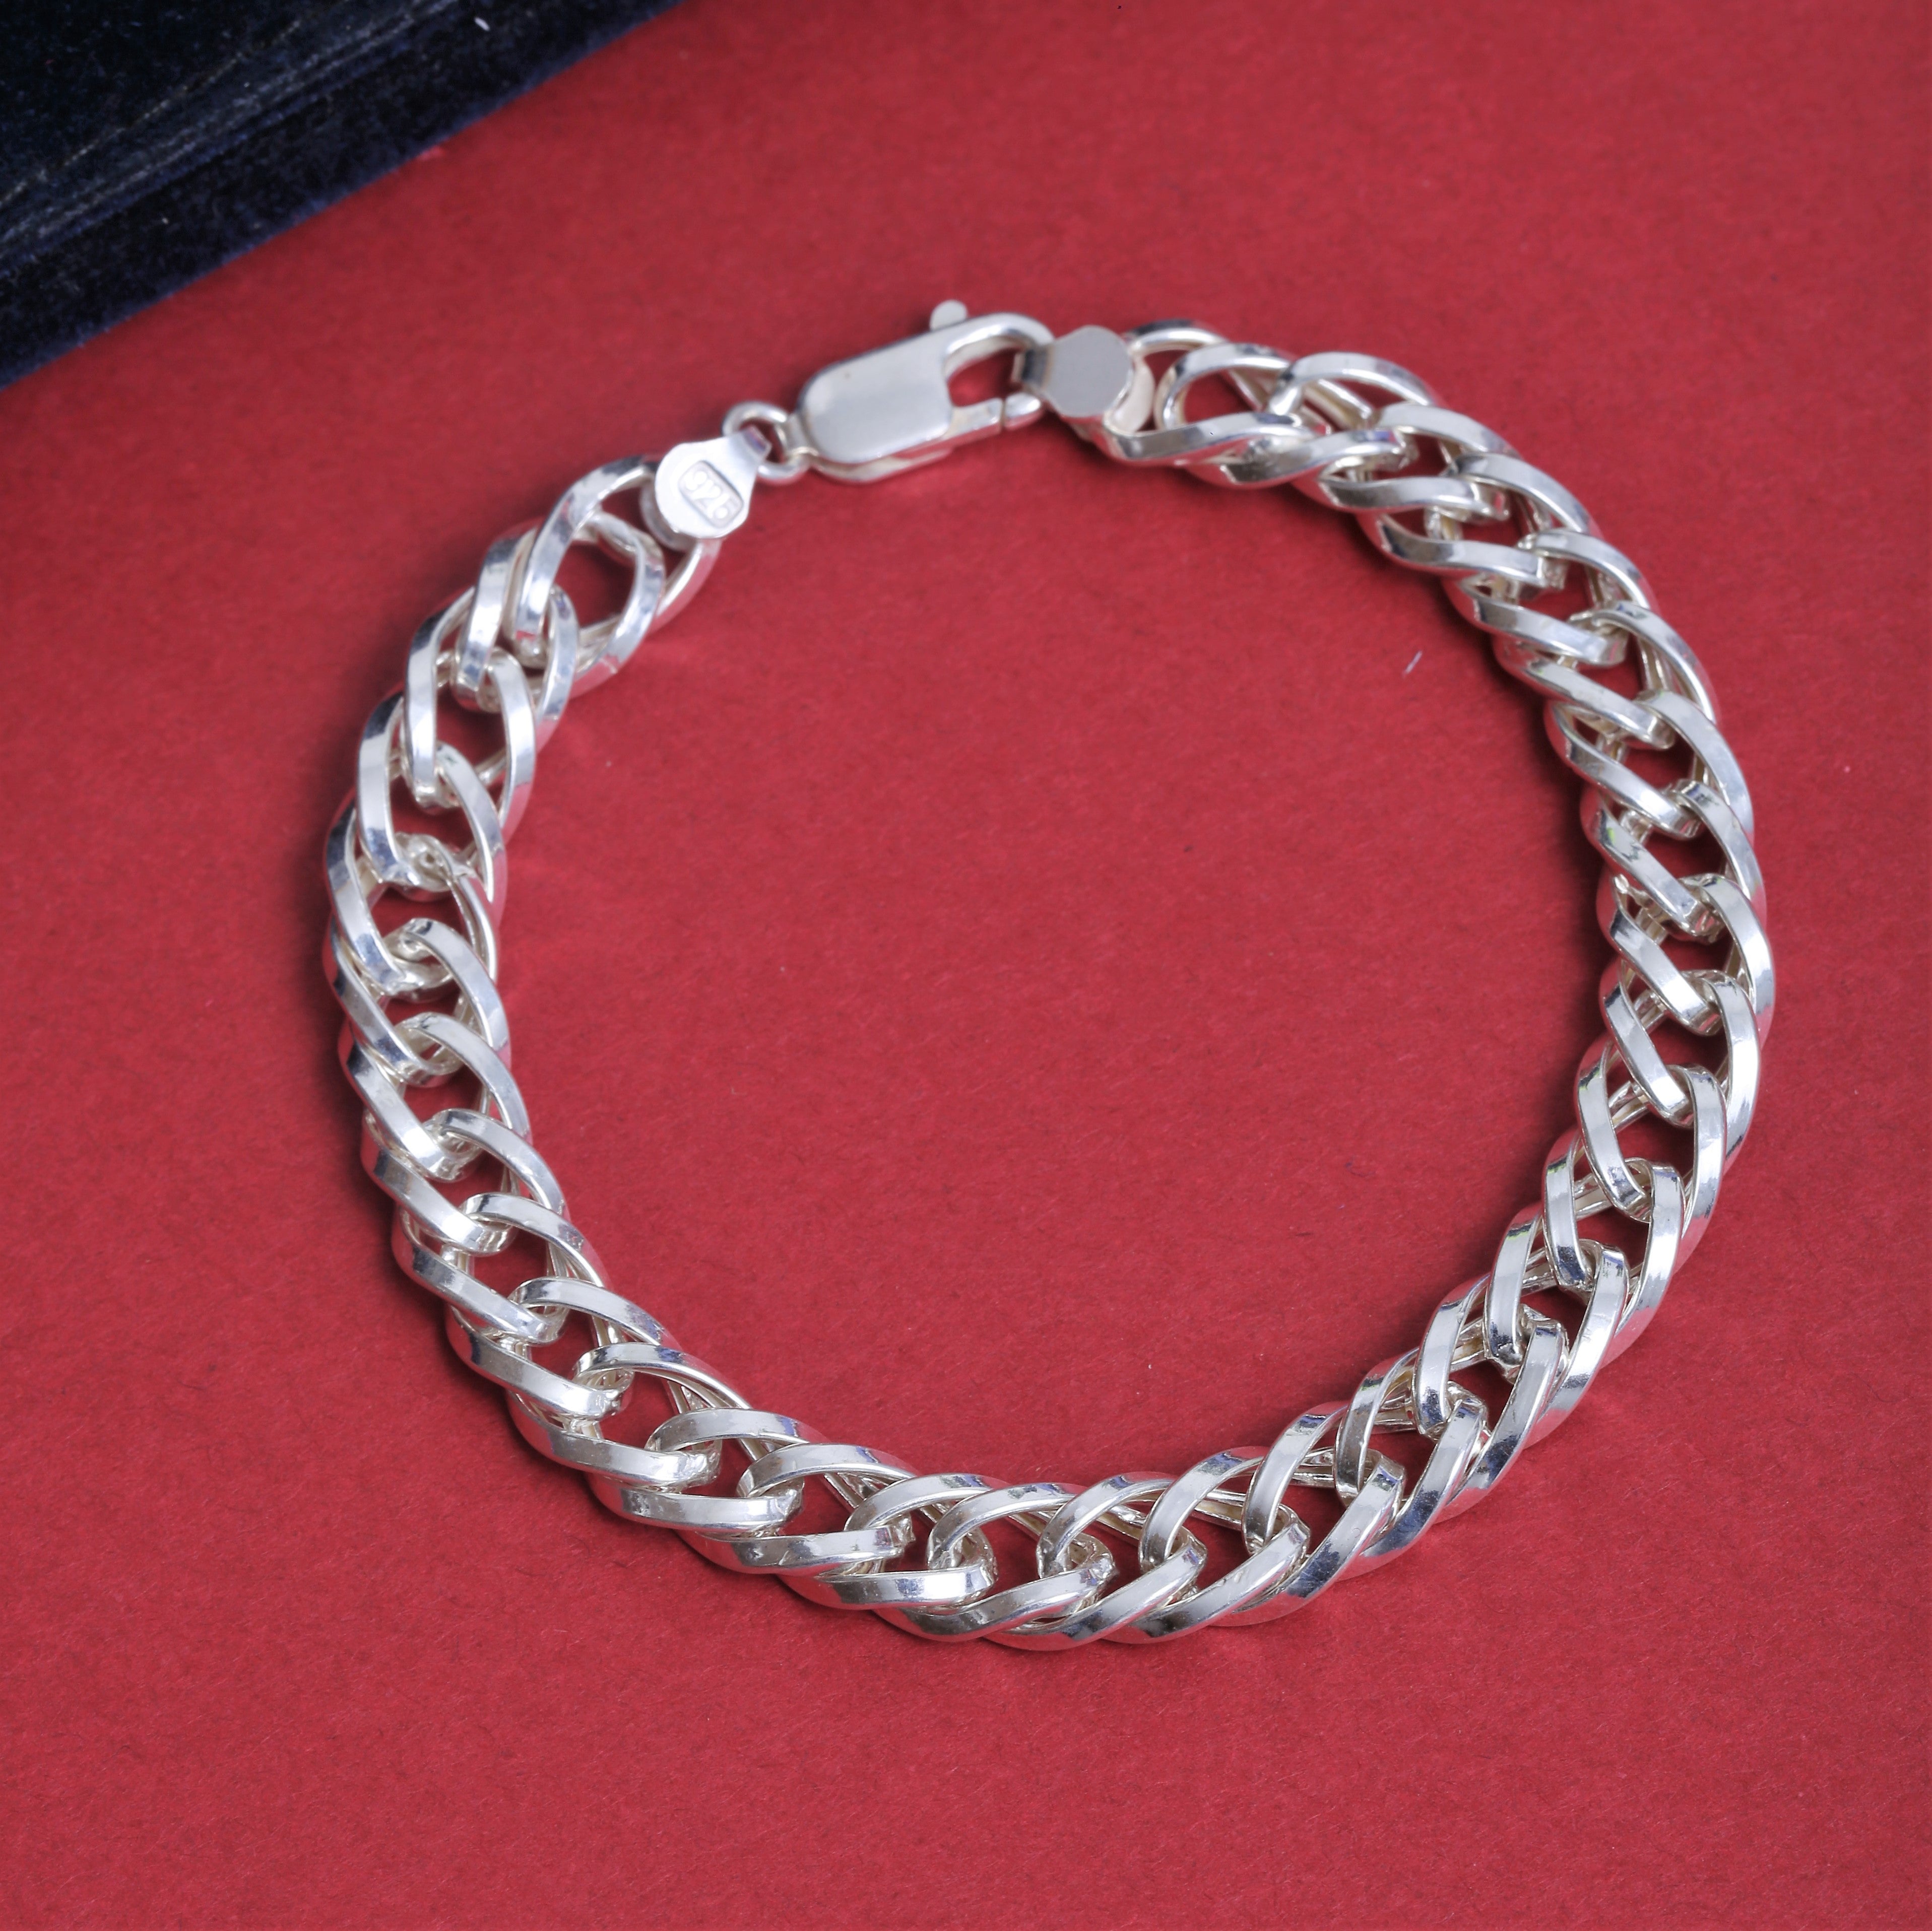 Buy Personalised name bracelet for men Online - silver siddhi.